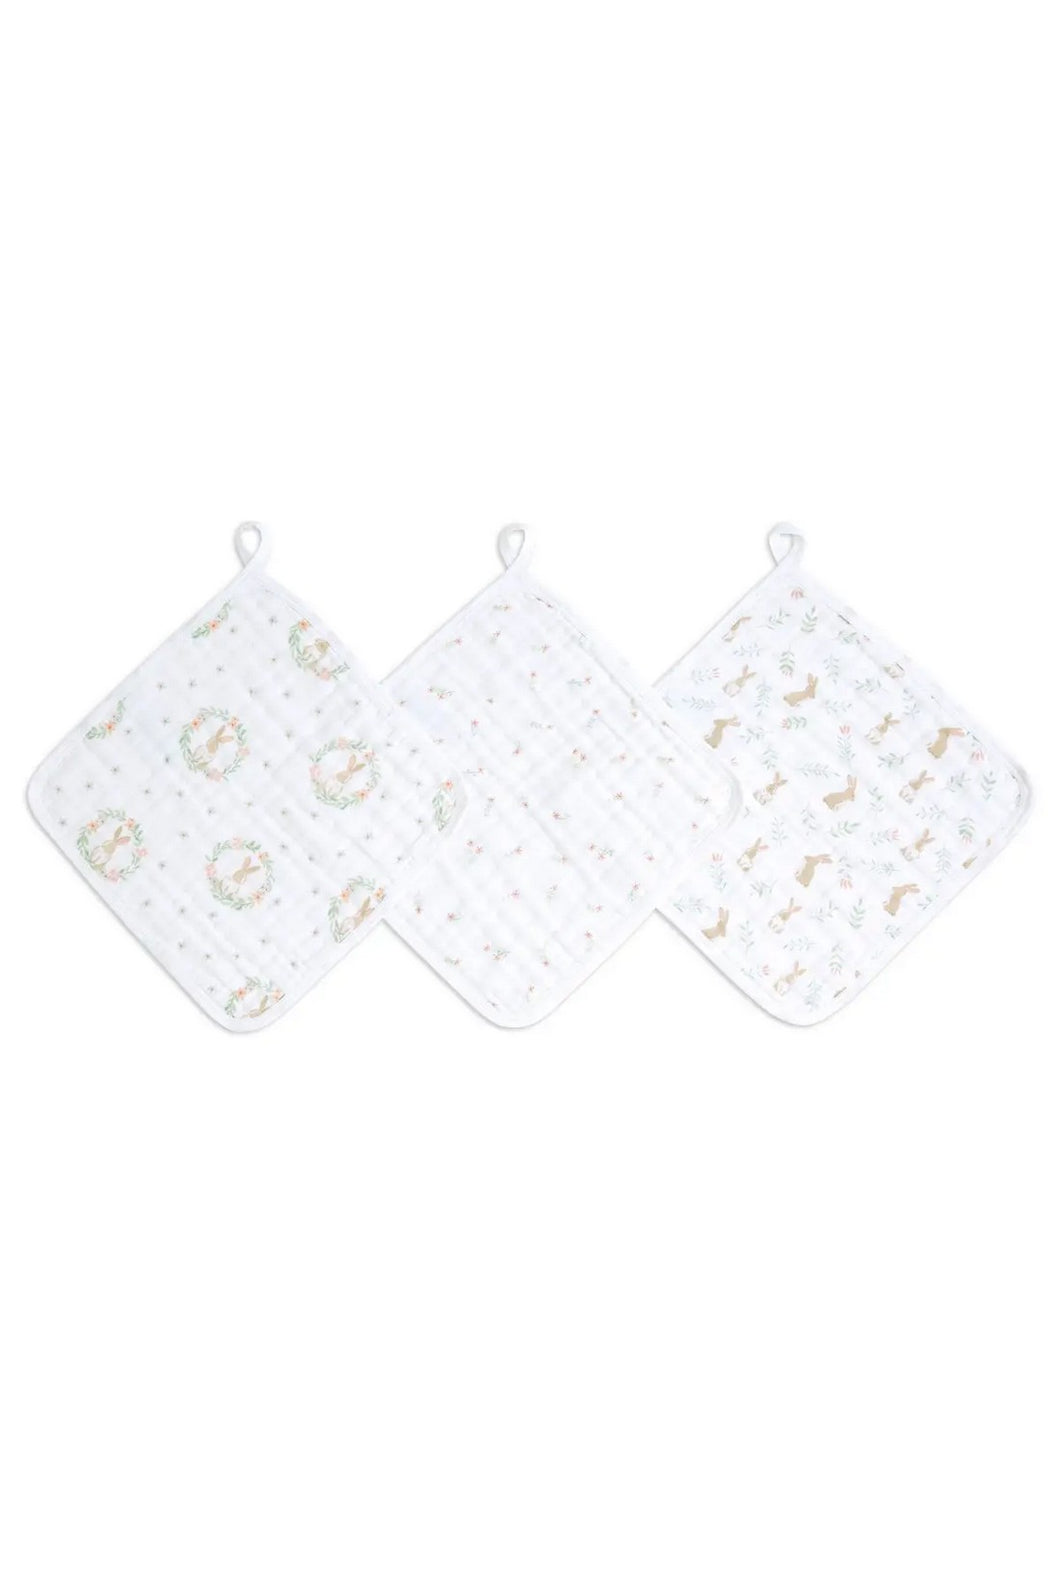 Aden + Anais Cotton Muslin Washcloth Set 3-Pack - Blushing Bunnies 1